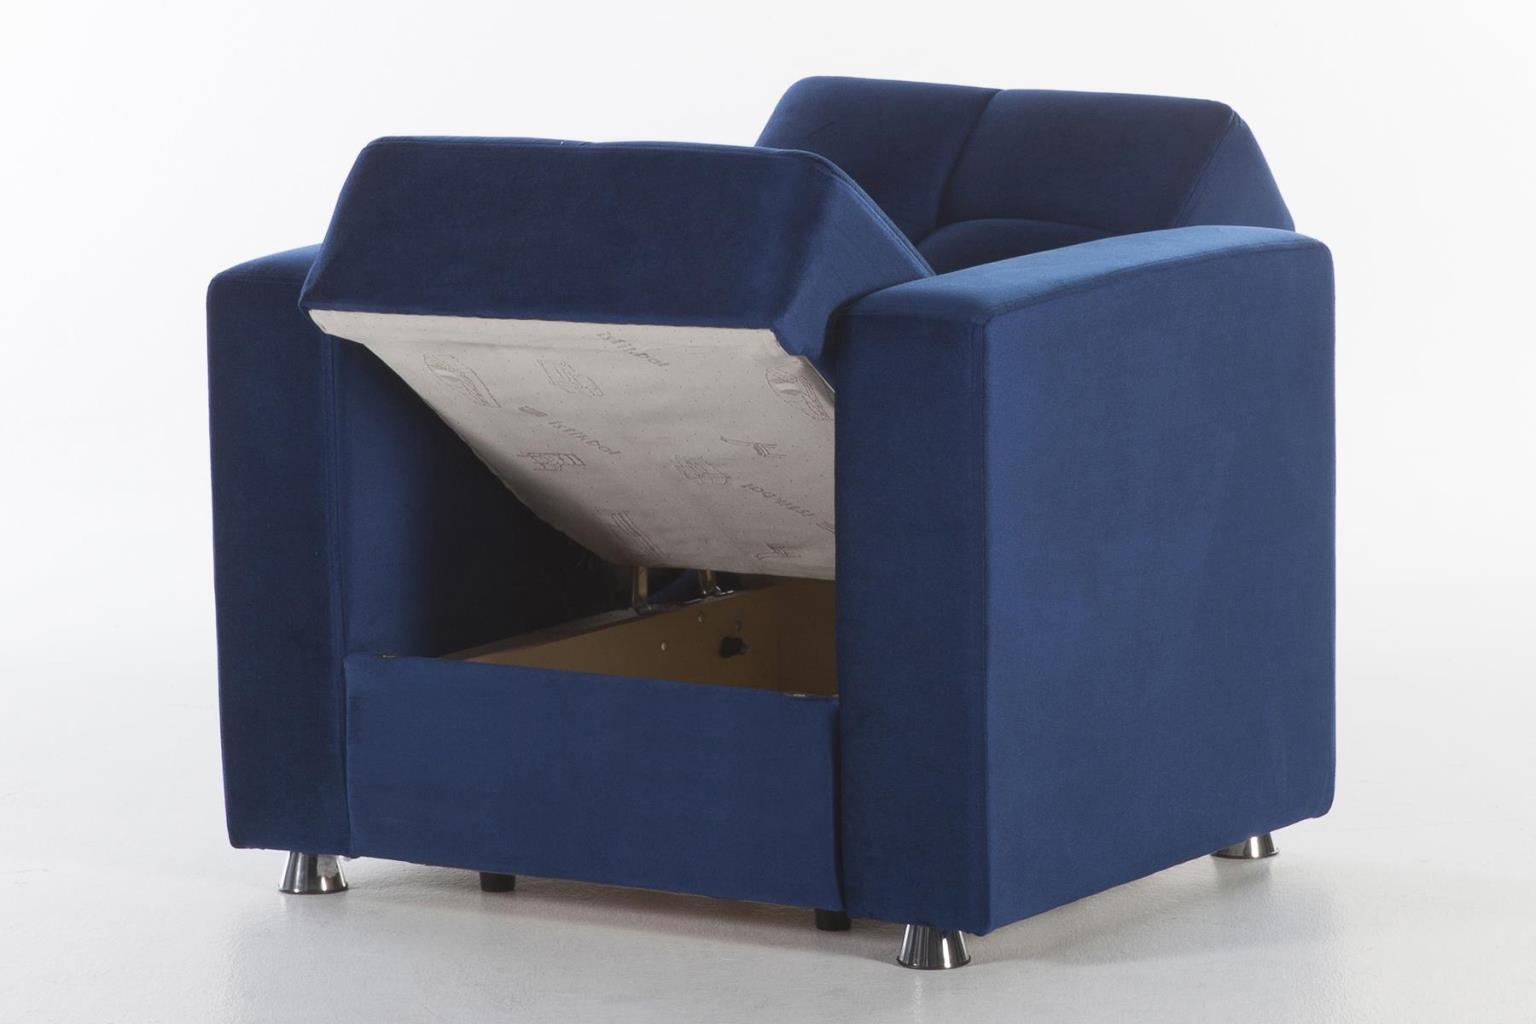 Elegant Armchair - Home Store Furniture